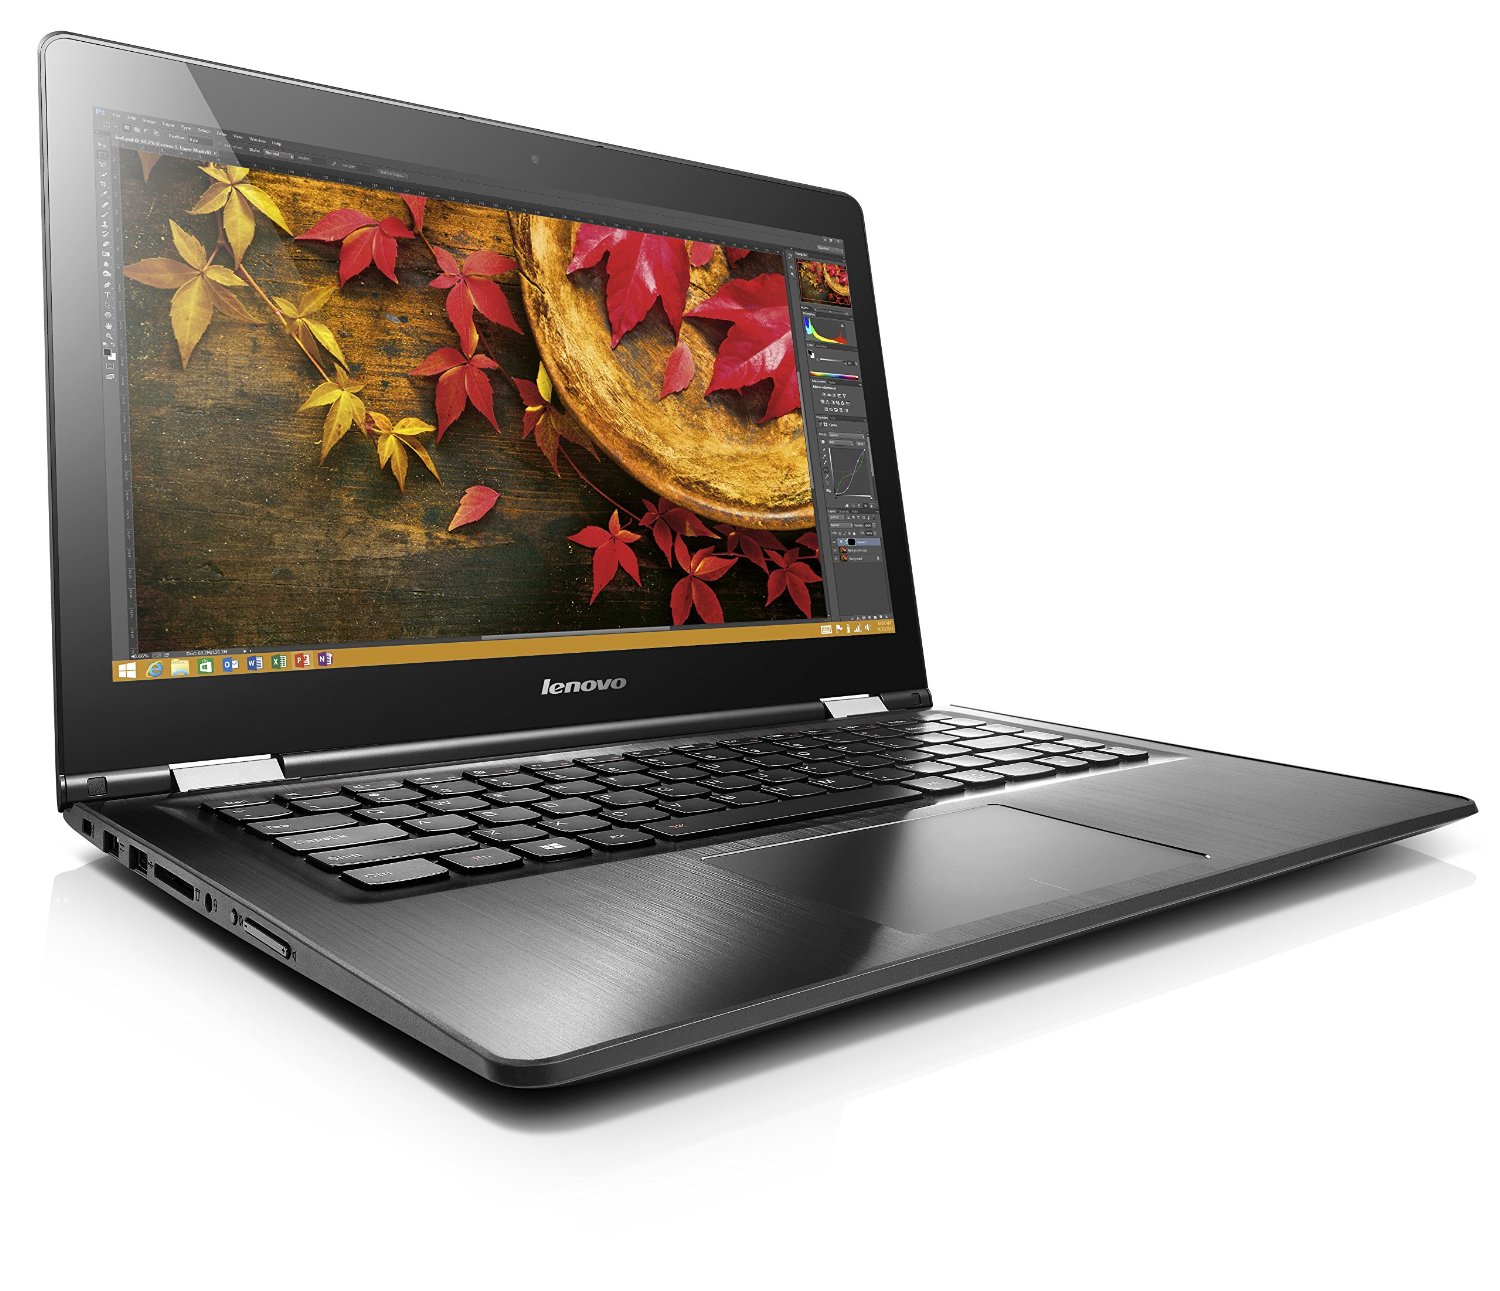 Lenovo Flex 3 14-Inch Touchscreen Laptop (Core i7, 8 GB RAM, 1 TB HDD) 80JK0021US